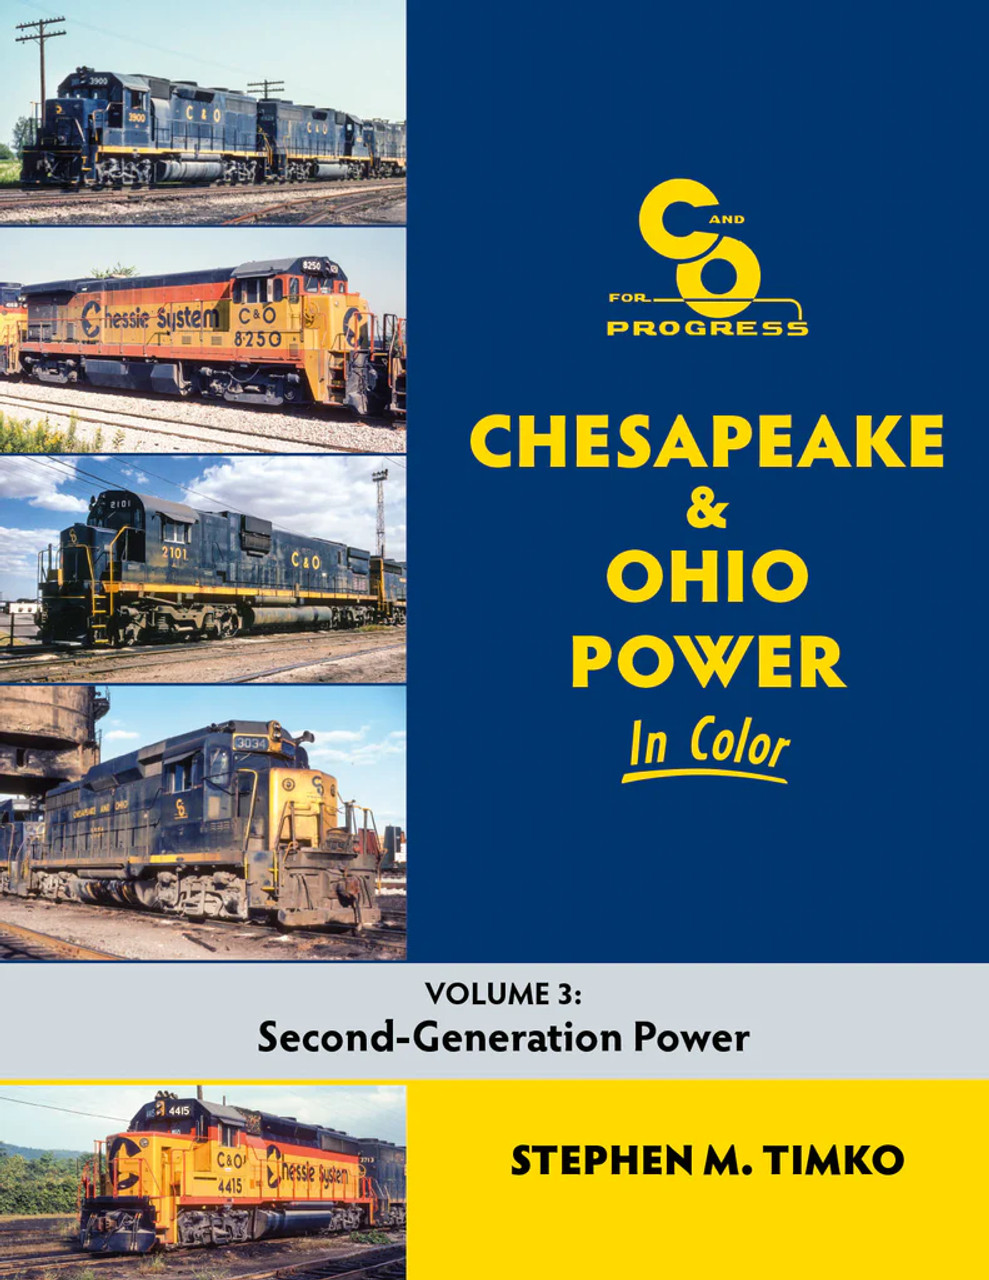 Morning Sun 1764 Chesapeake & Ohio Power In Color Volume 3: Second-Generation Power